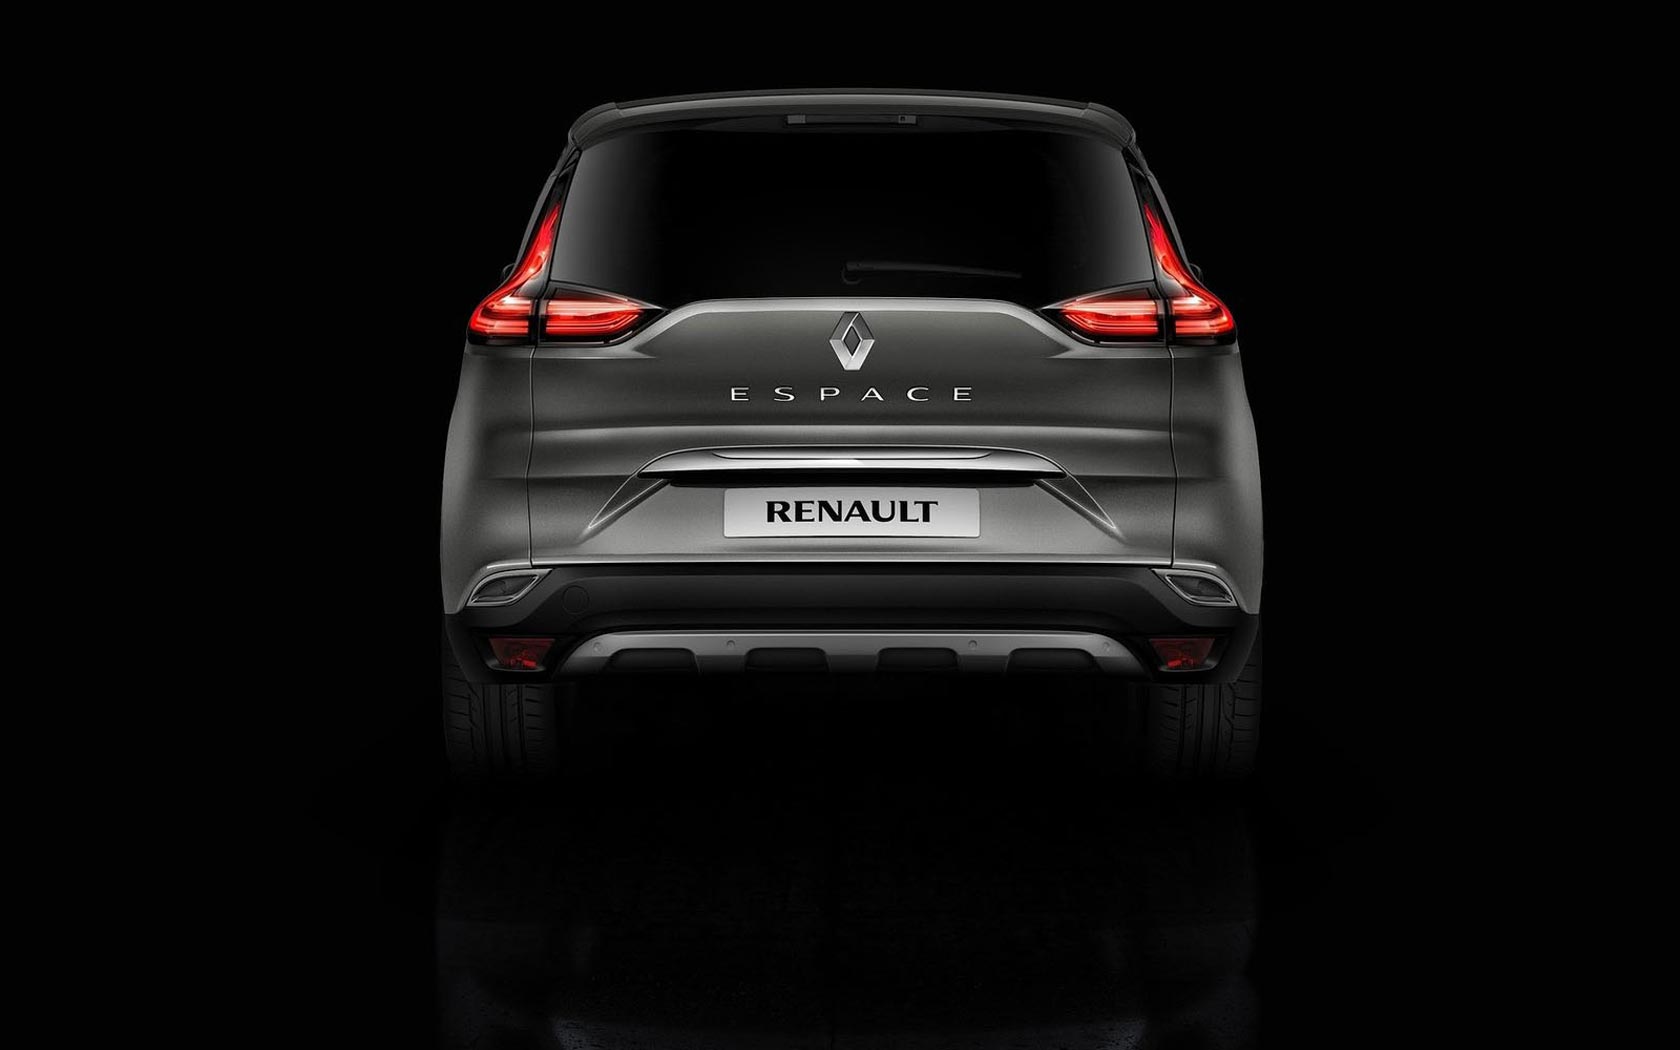  Renault Espace (2015-2019)